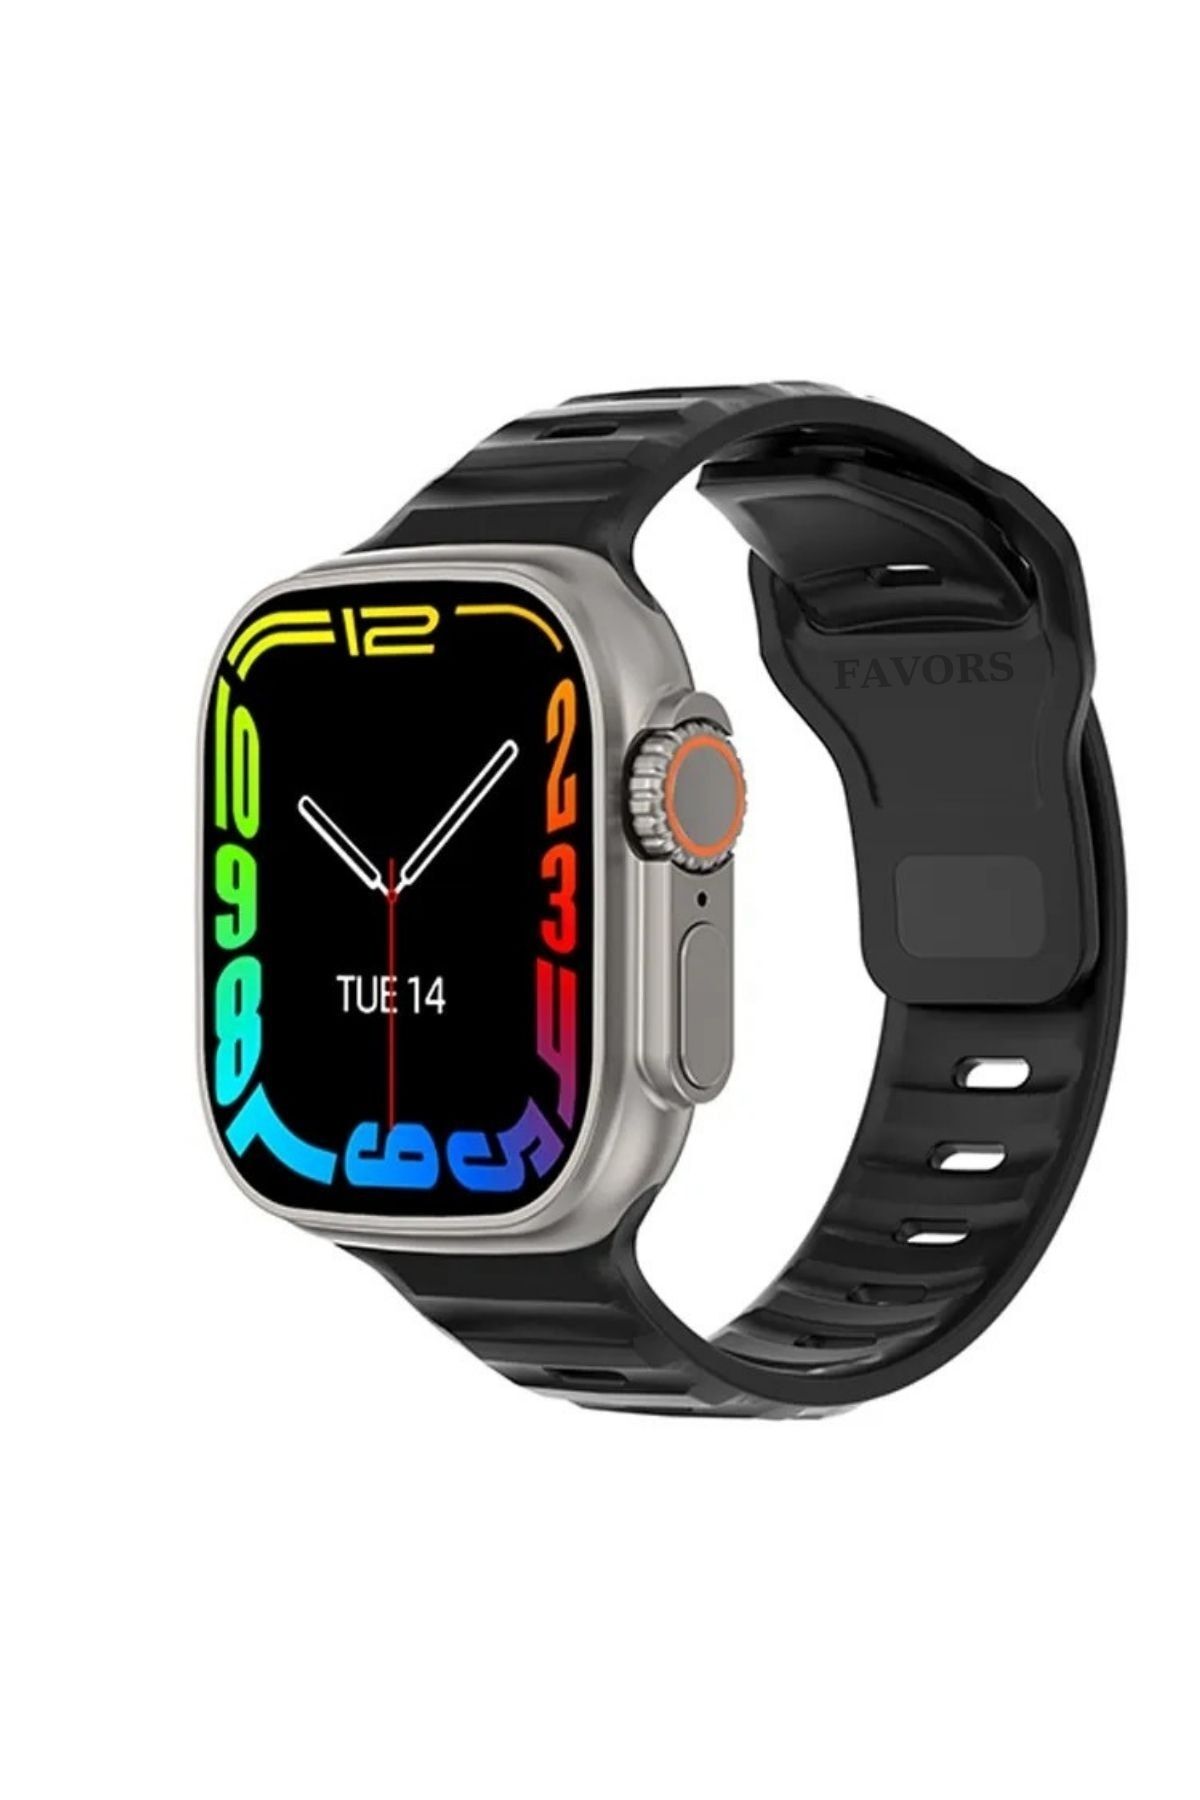 Favors Dt8 Ultra Akıllı Saat Watch 8 Ultra 2.1 Inc 49mm Smart Watch Ios Android Uyumlu Yeni Nesil Nfc Siri